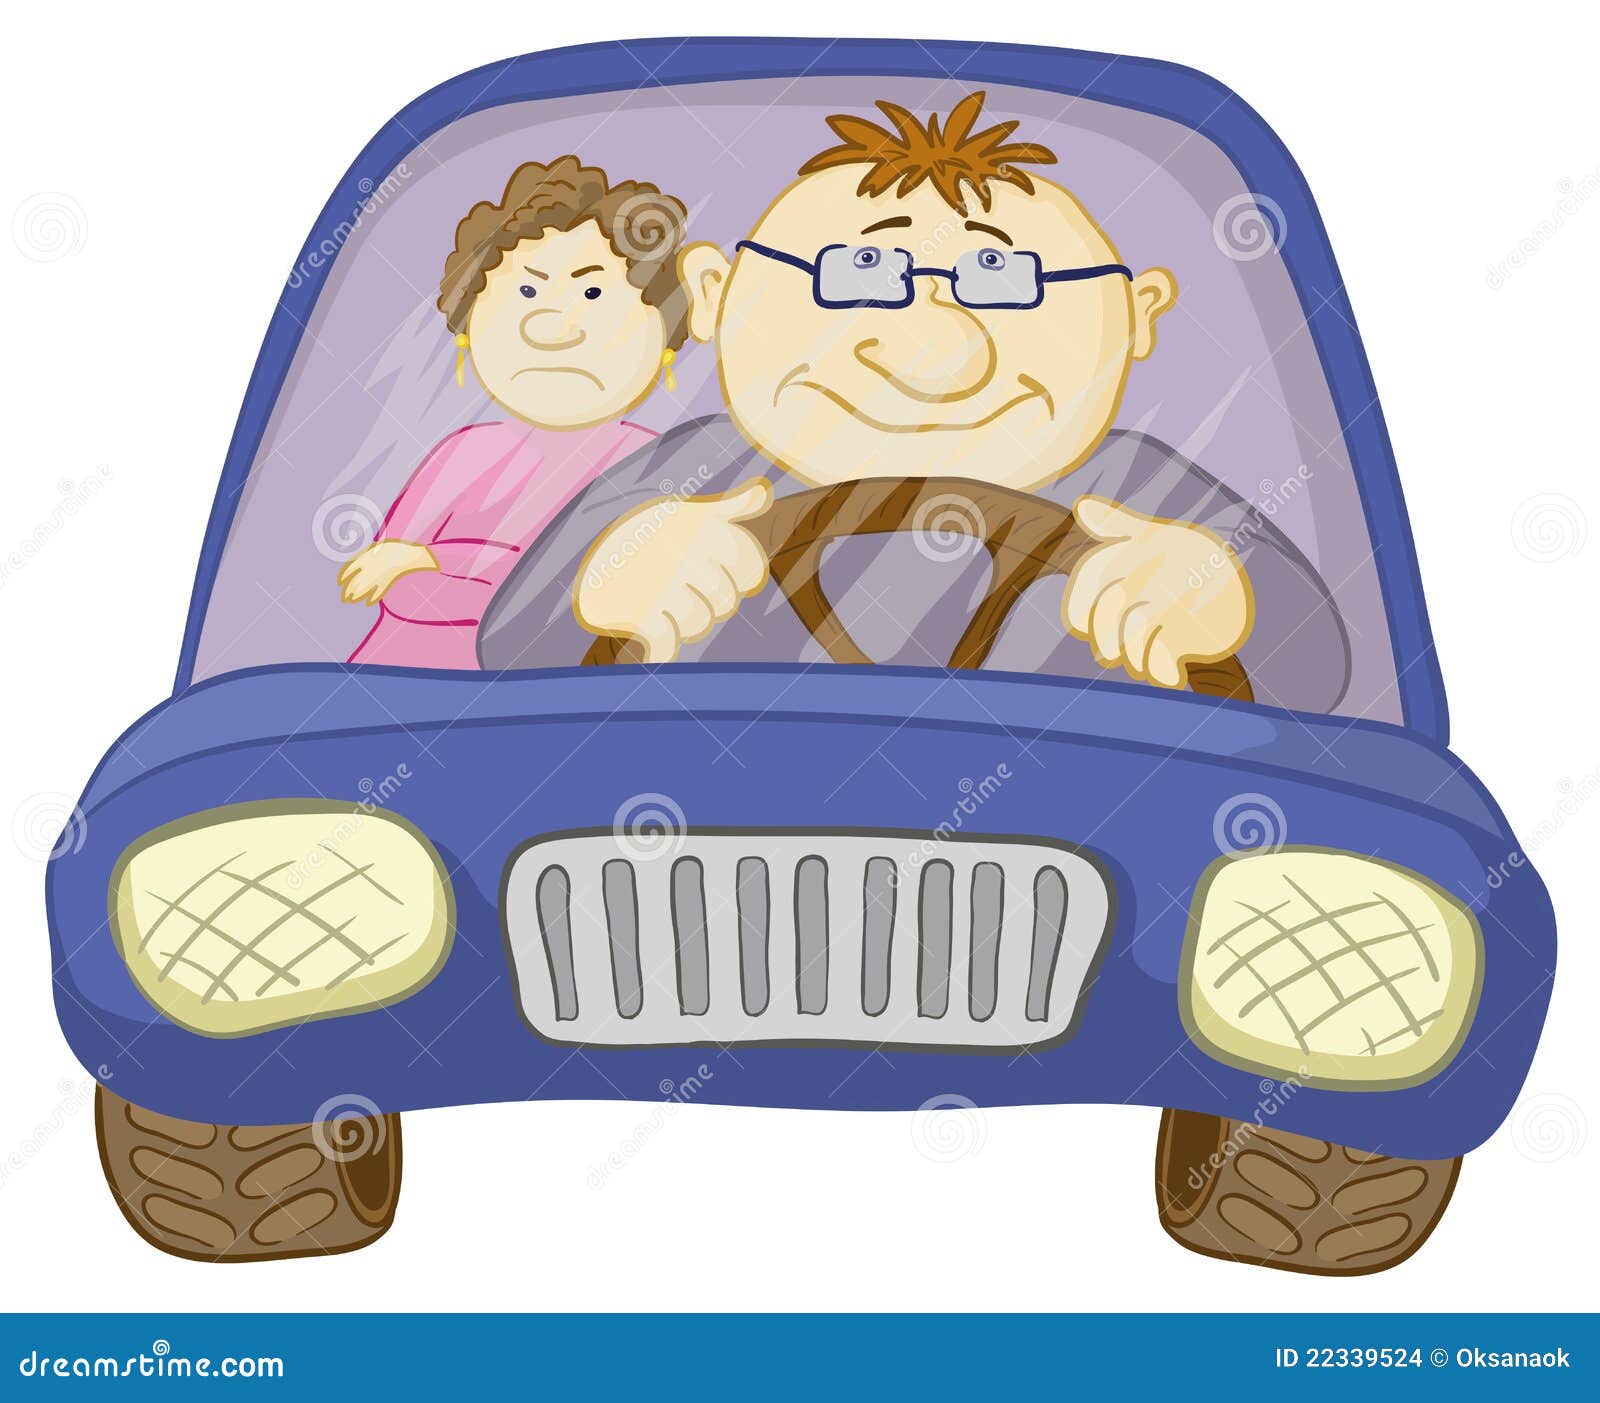 car, driver and passenger